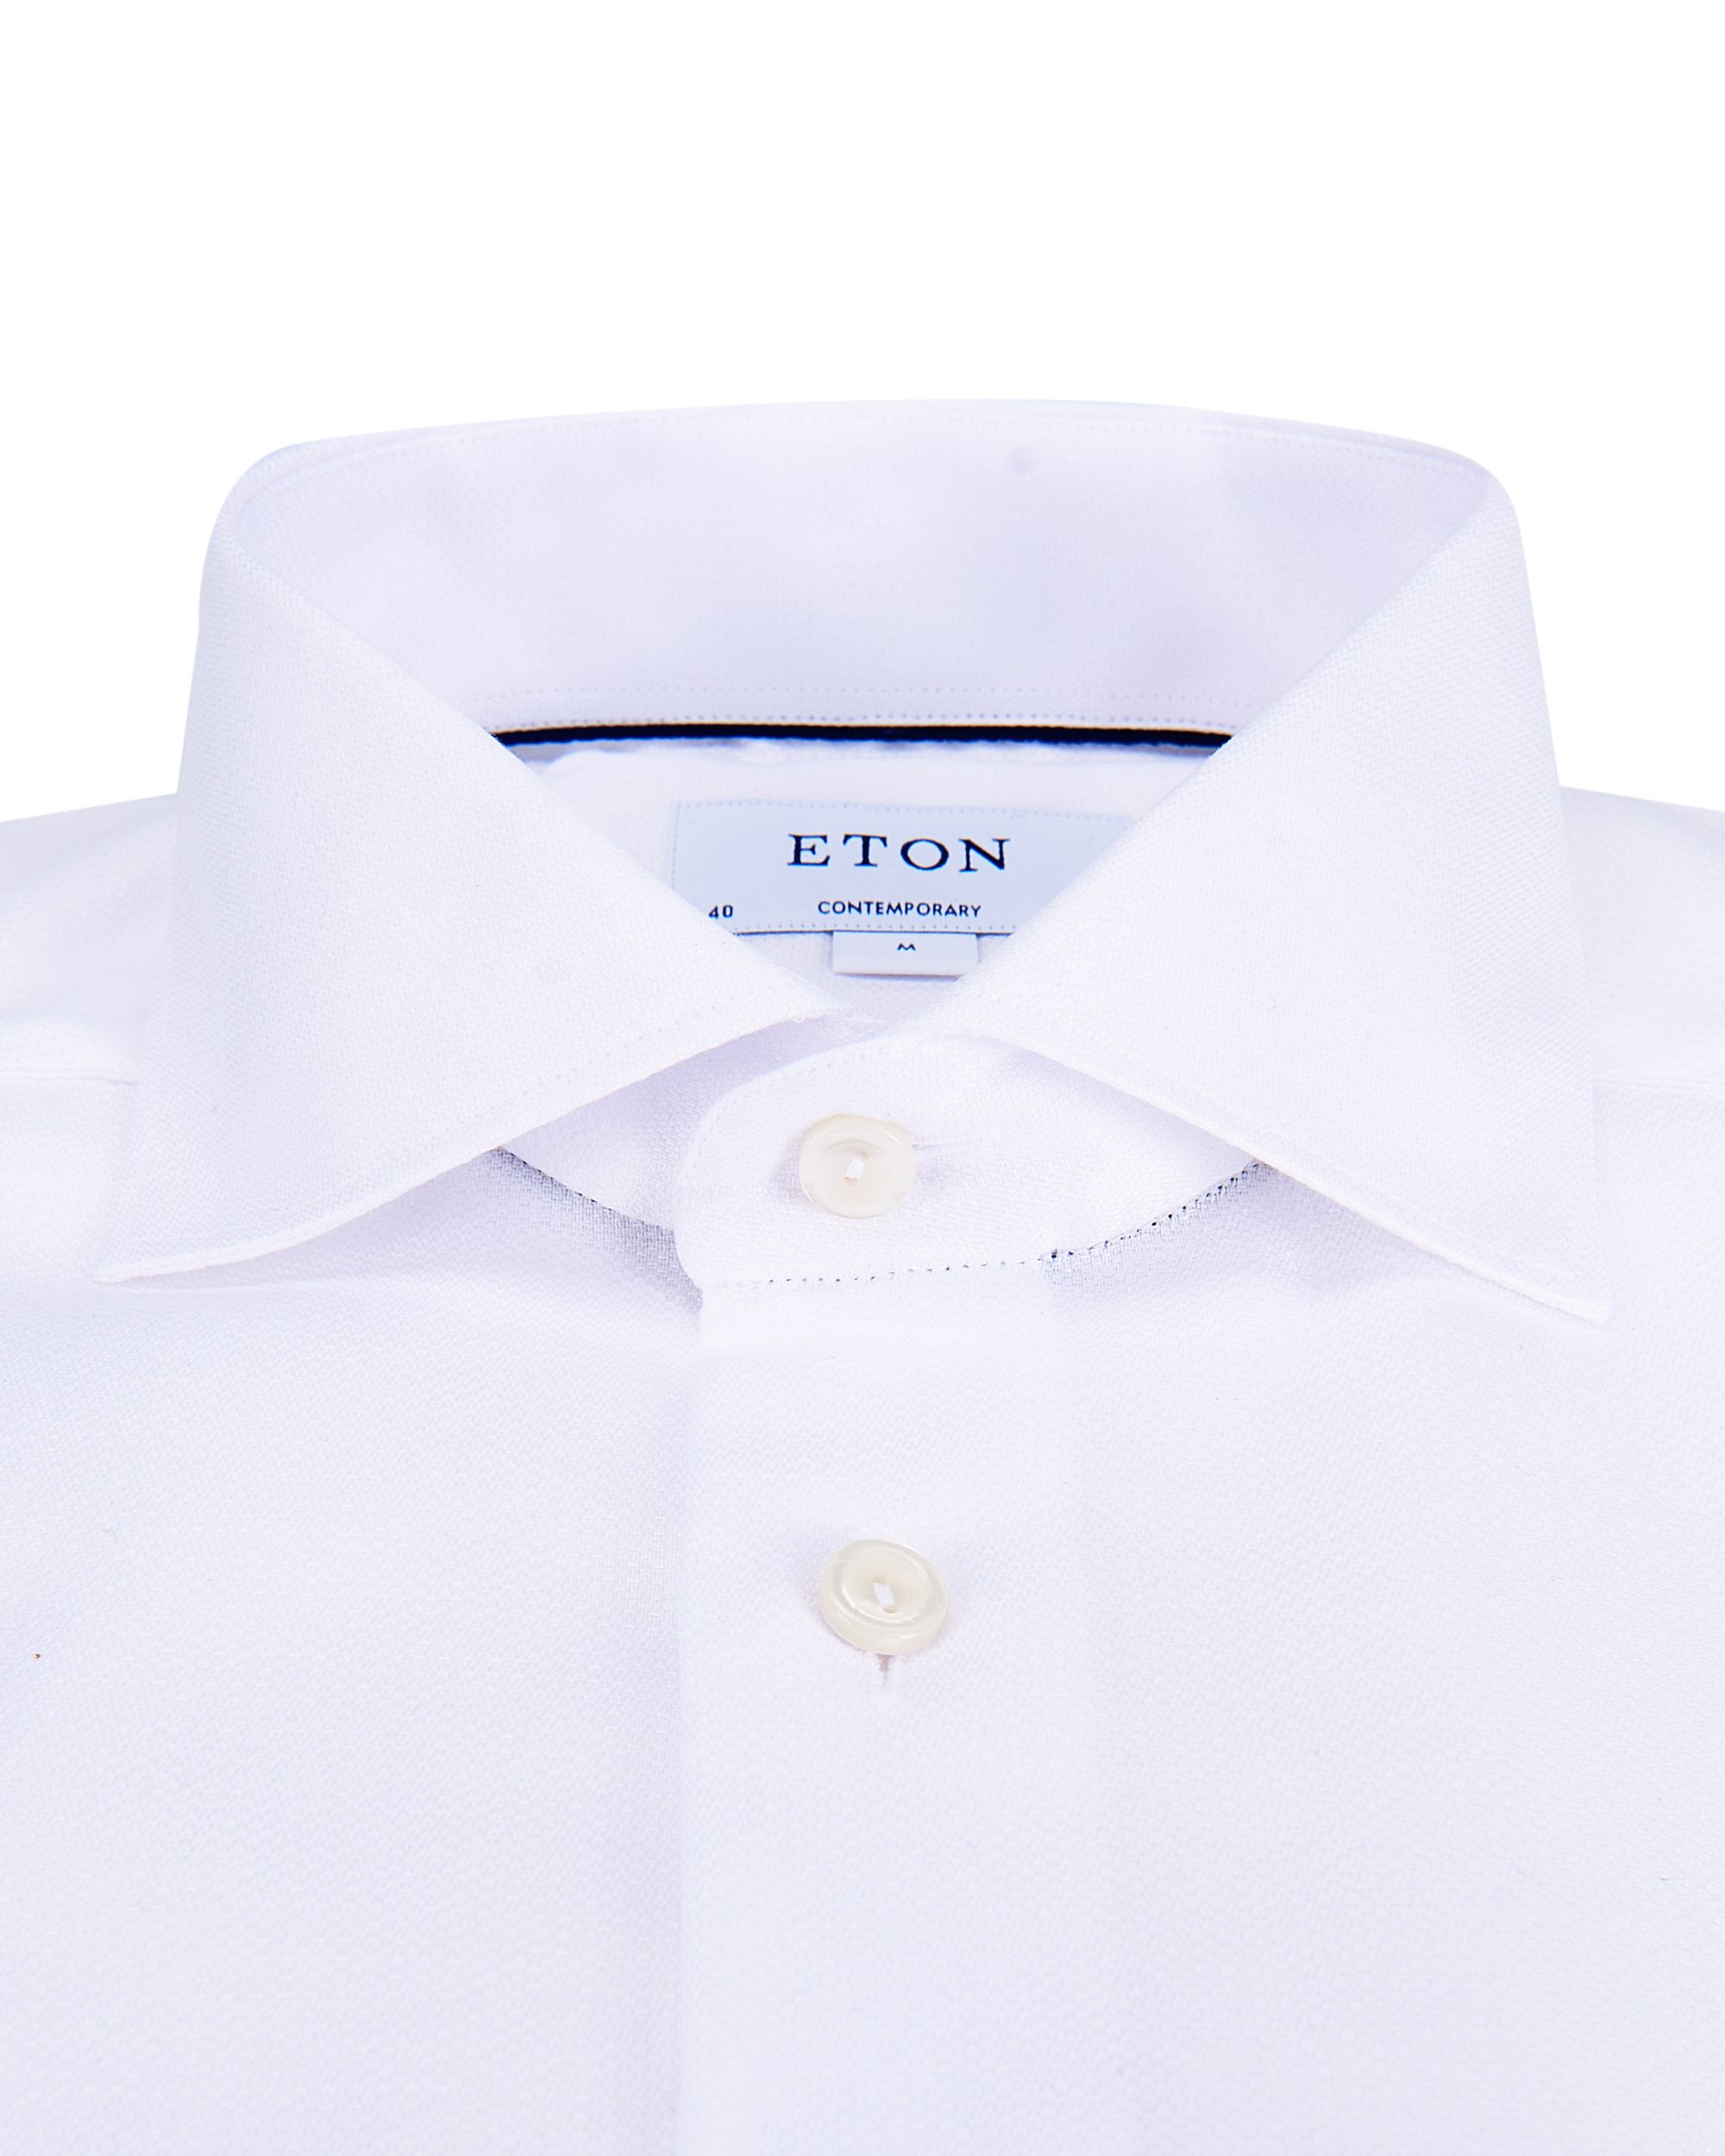 ETON Overhemd LM Wit 082179-001-37/38